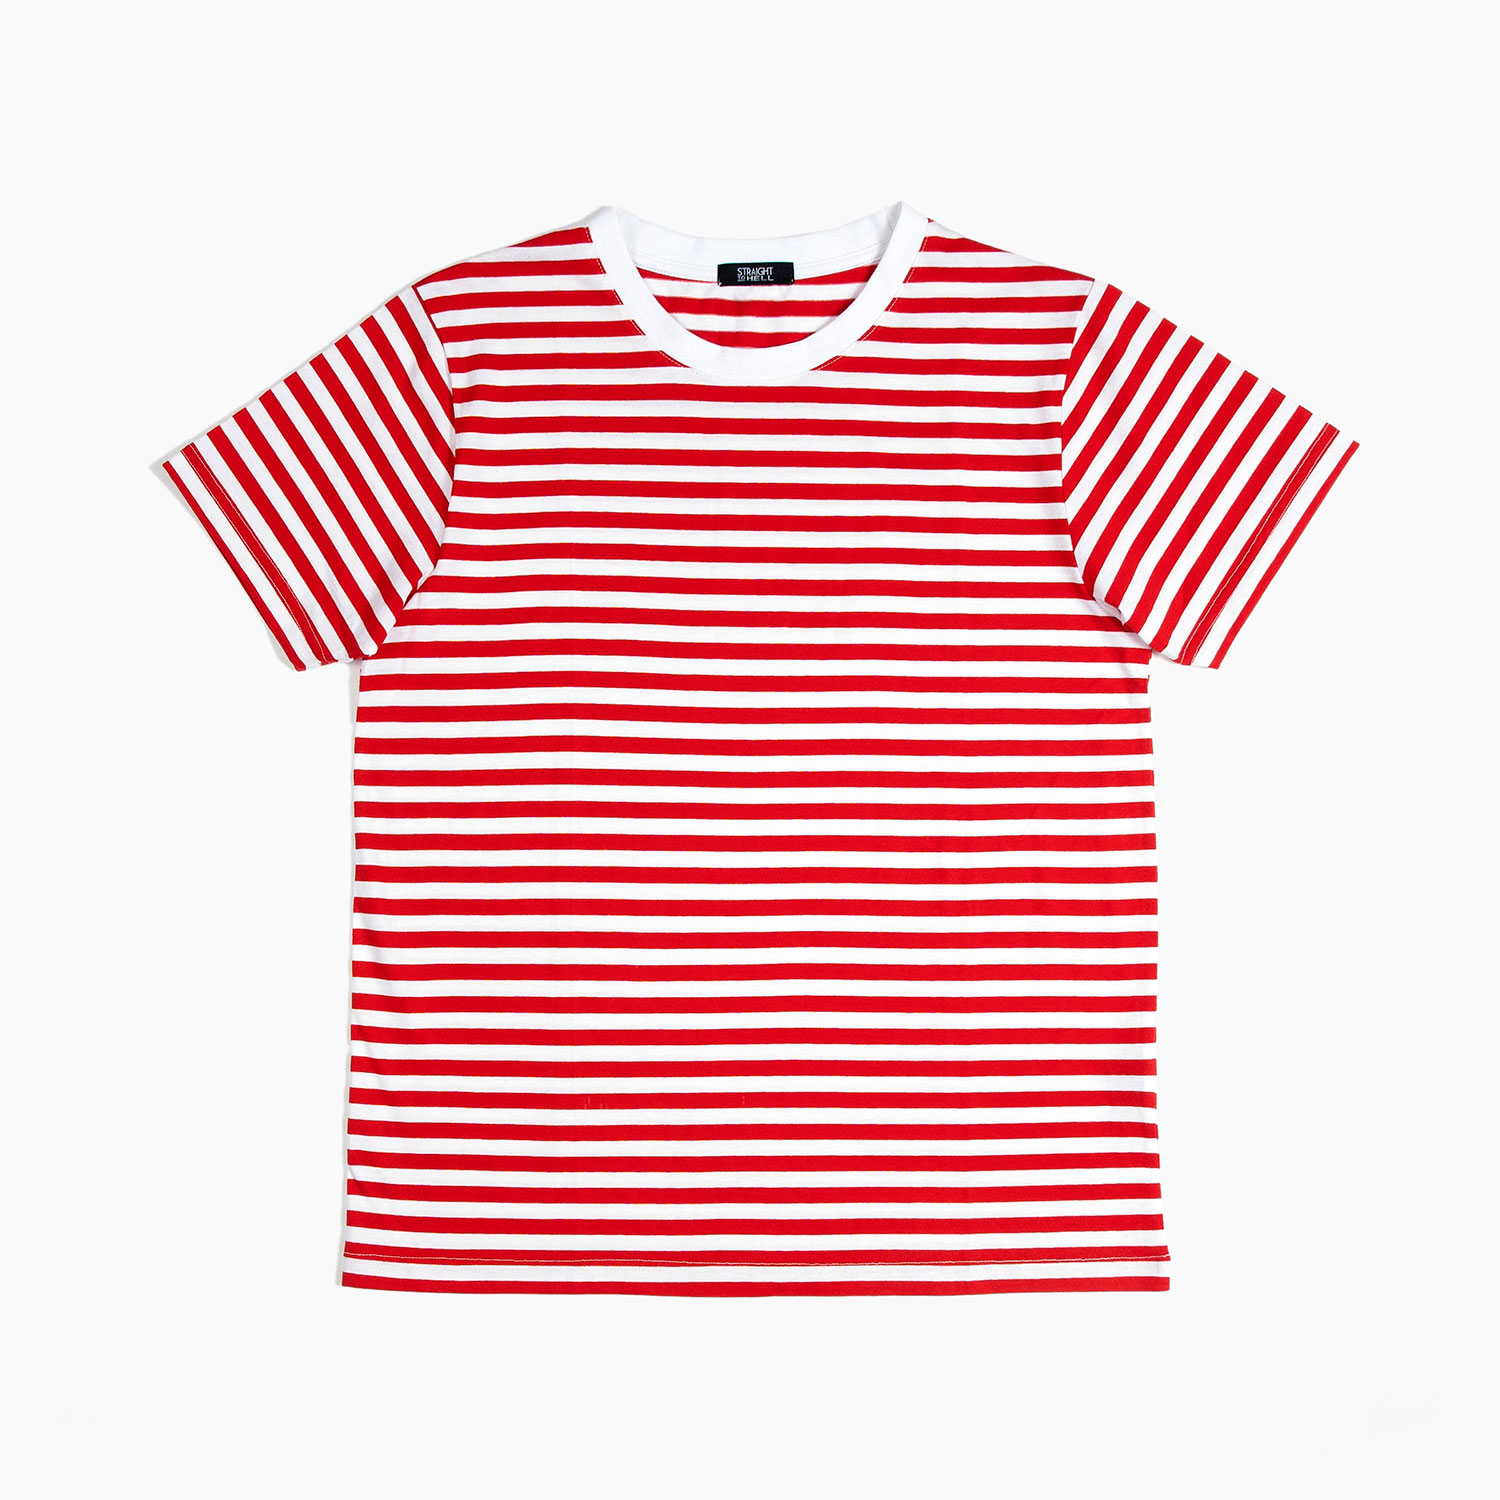 Jasper - White and Red Striped T-Shirt (Size XS, S, M, L, XL, 2XL)